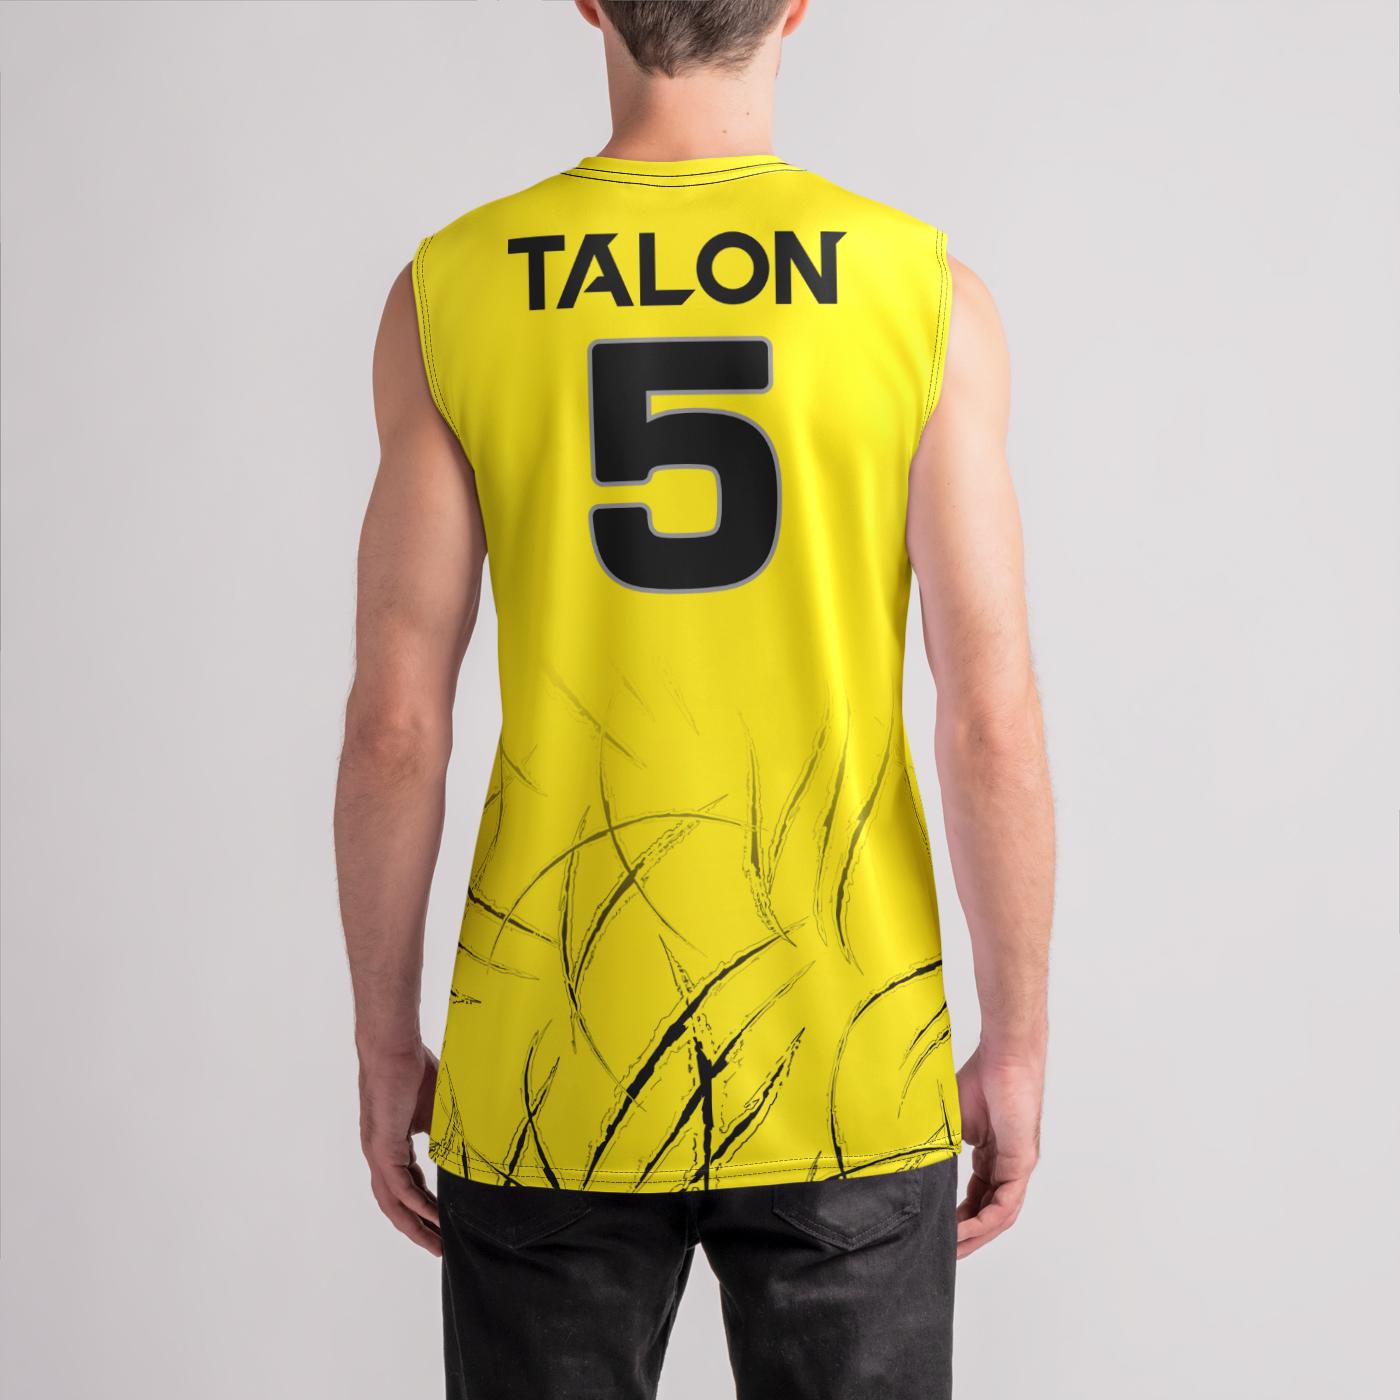 Talon Yellow Fade Jersey